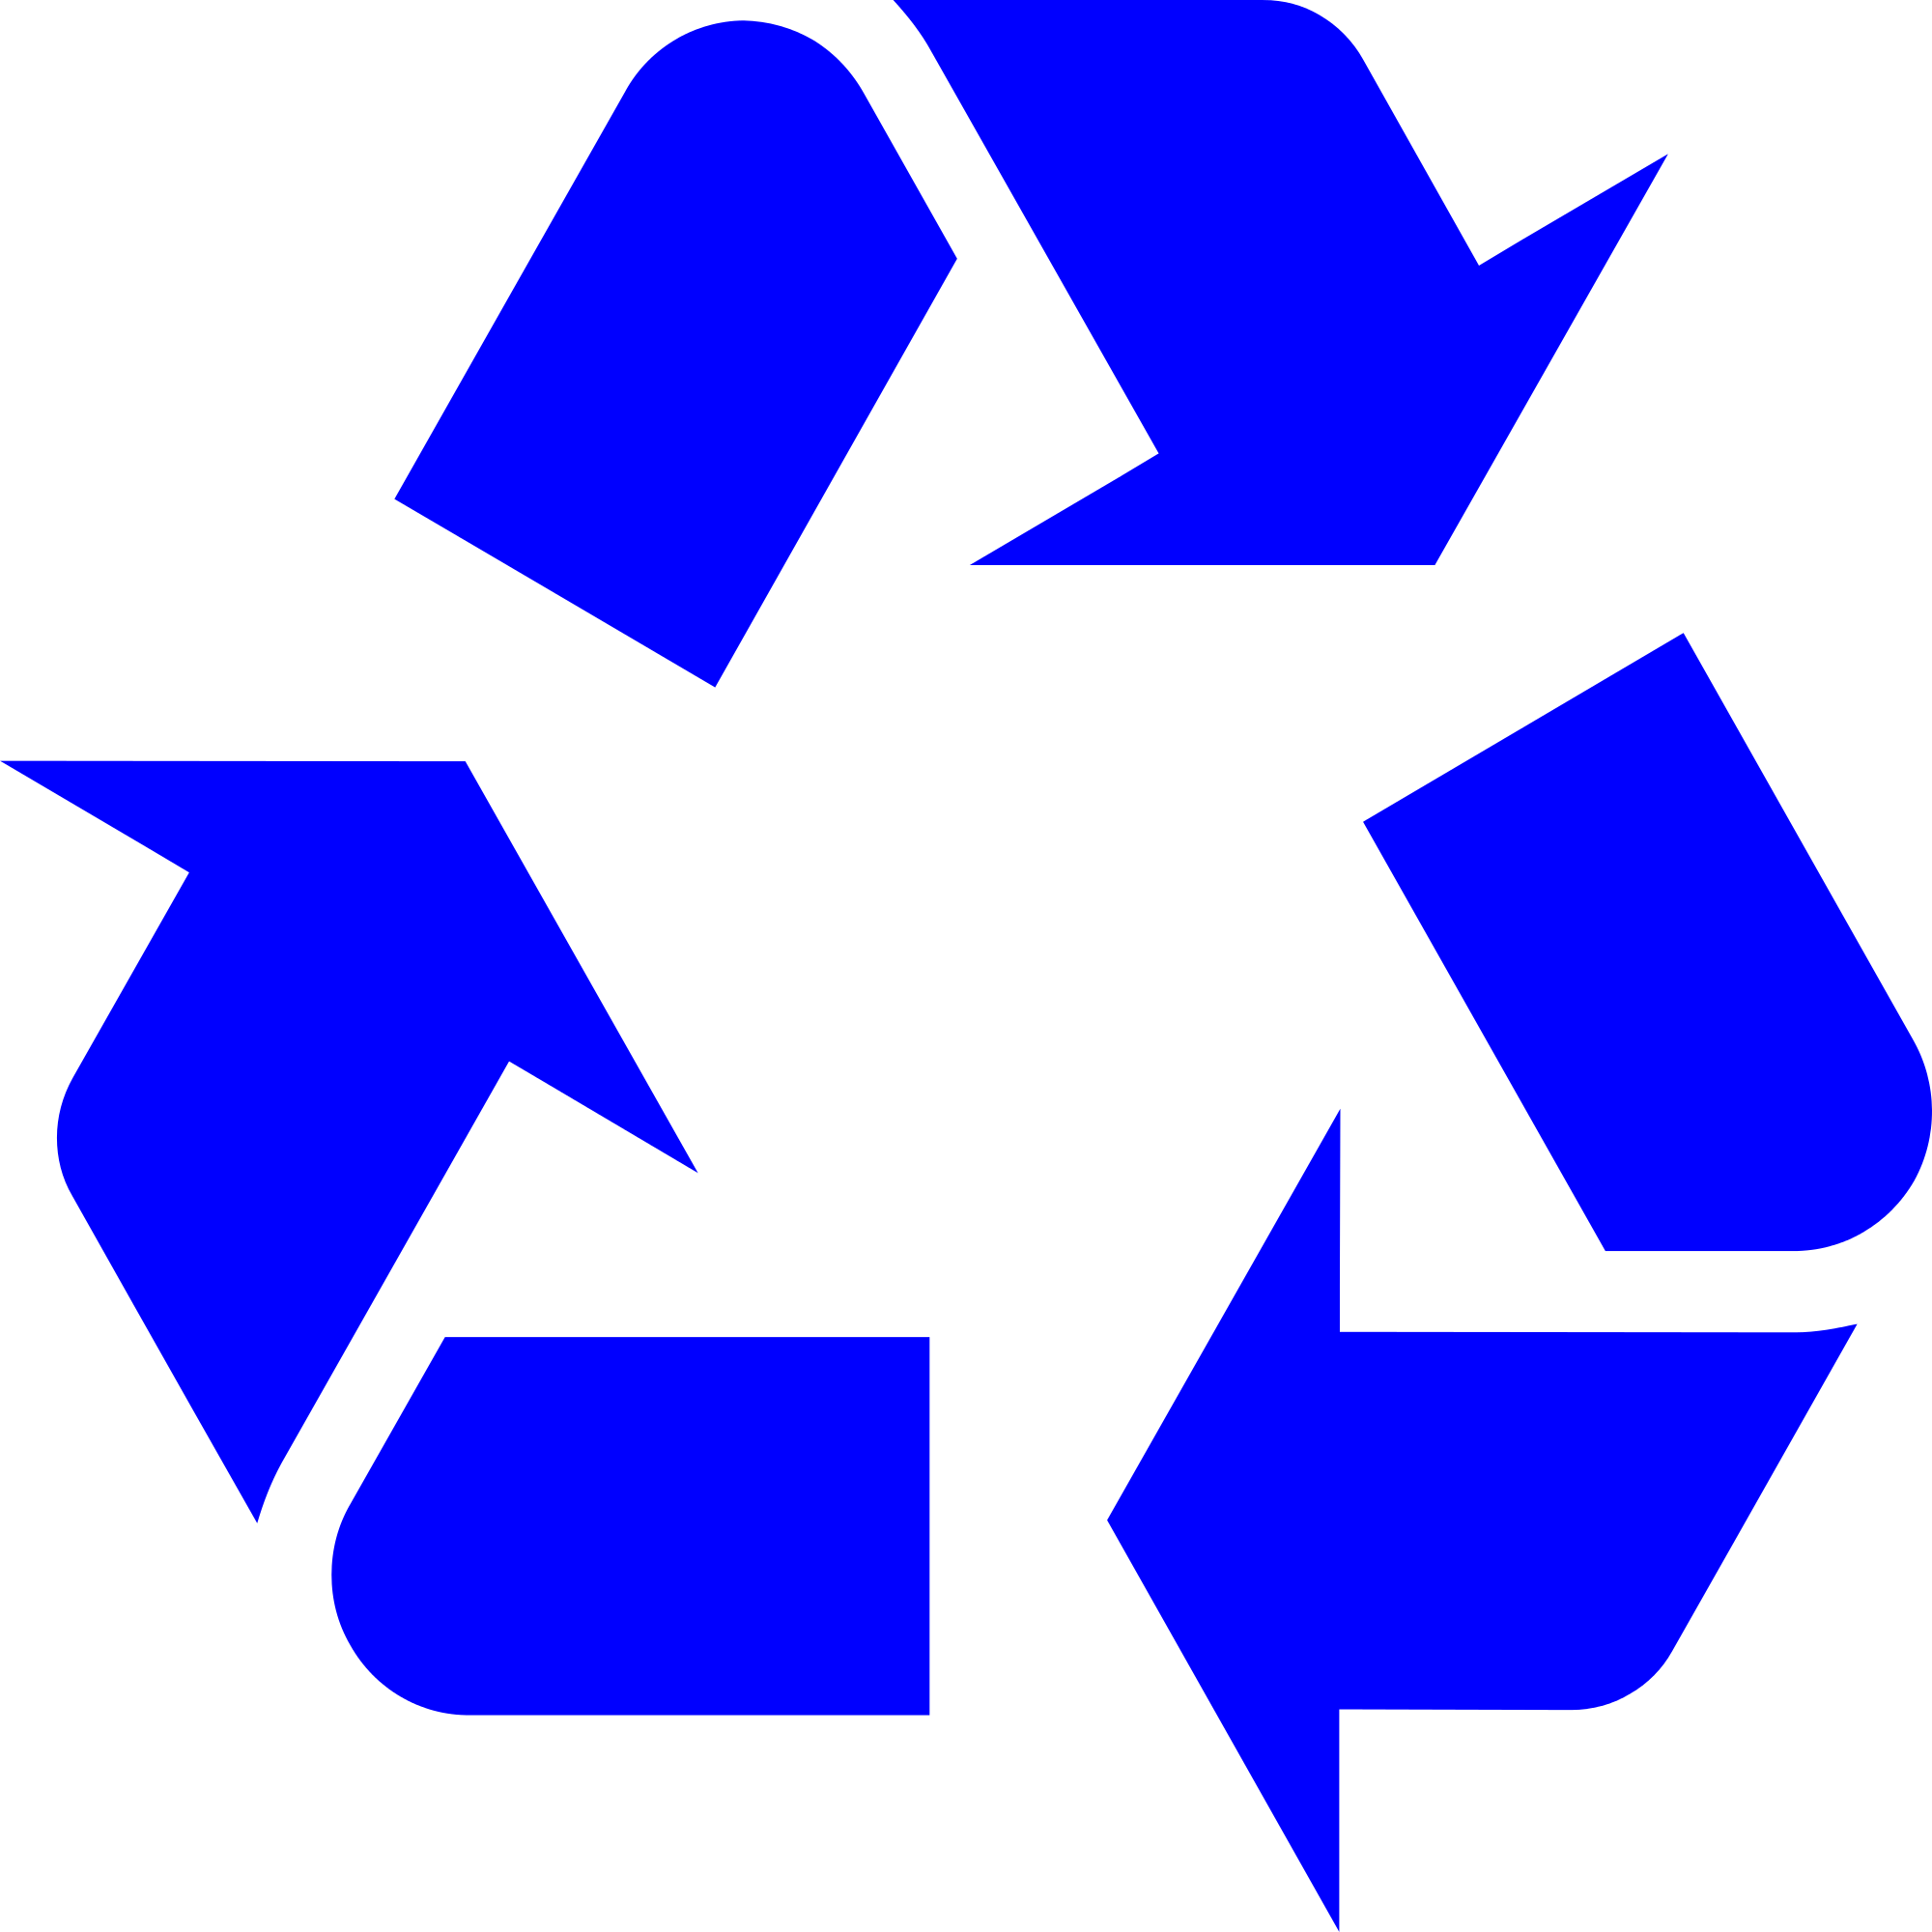 File:Recycling symbol blue.svg